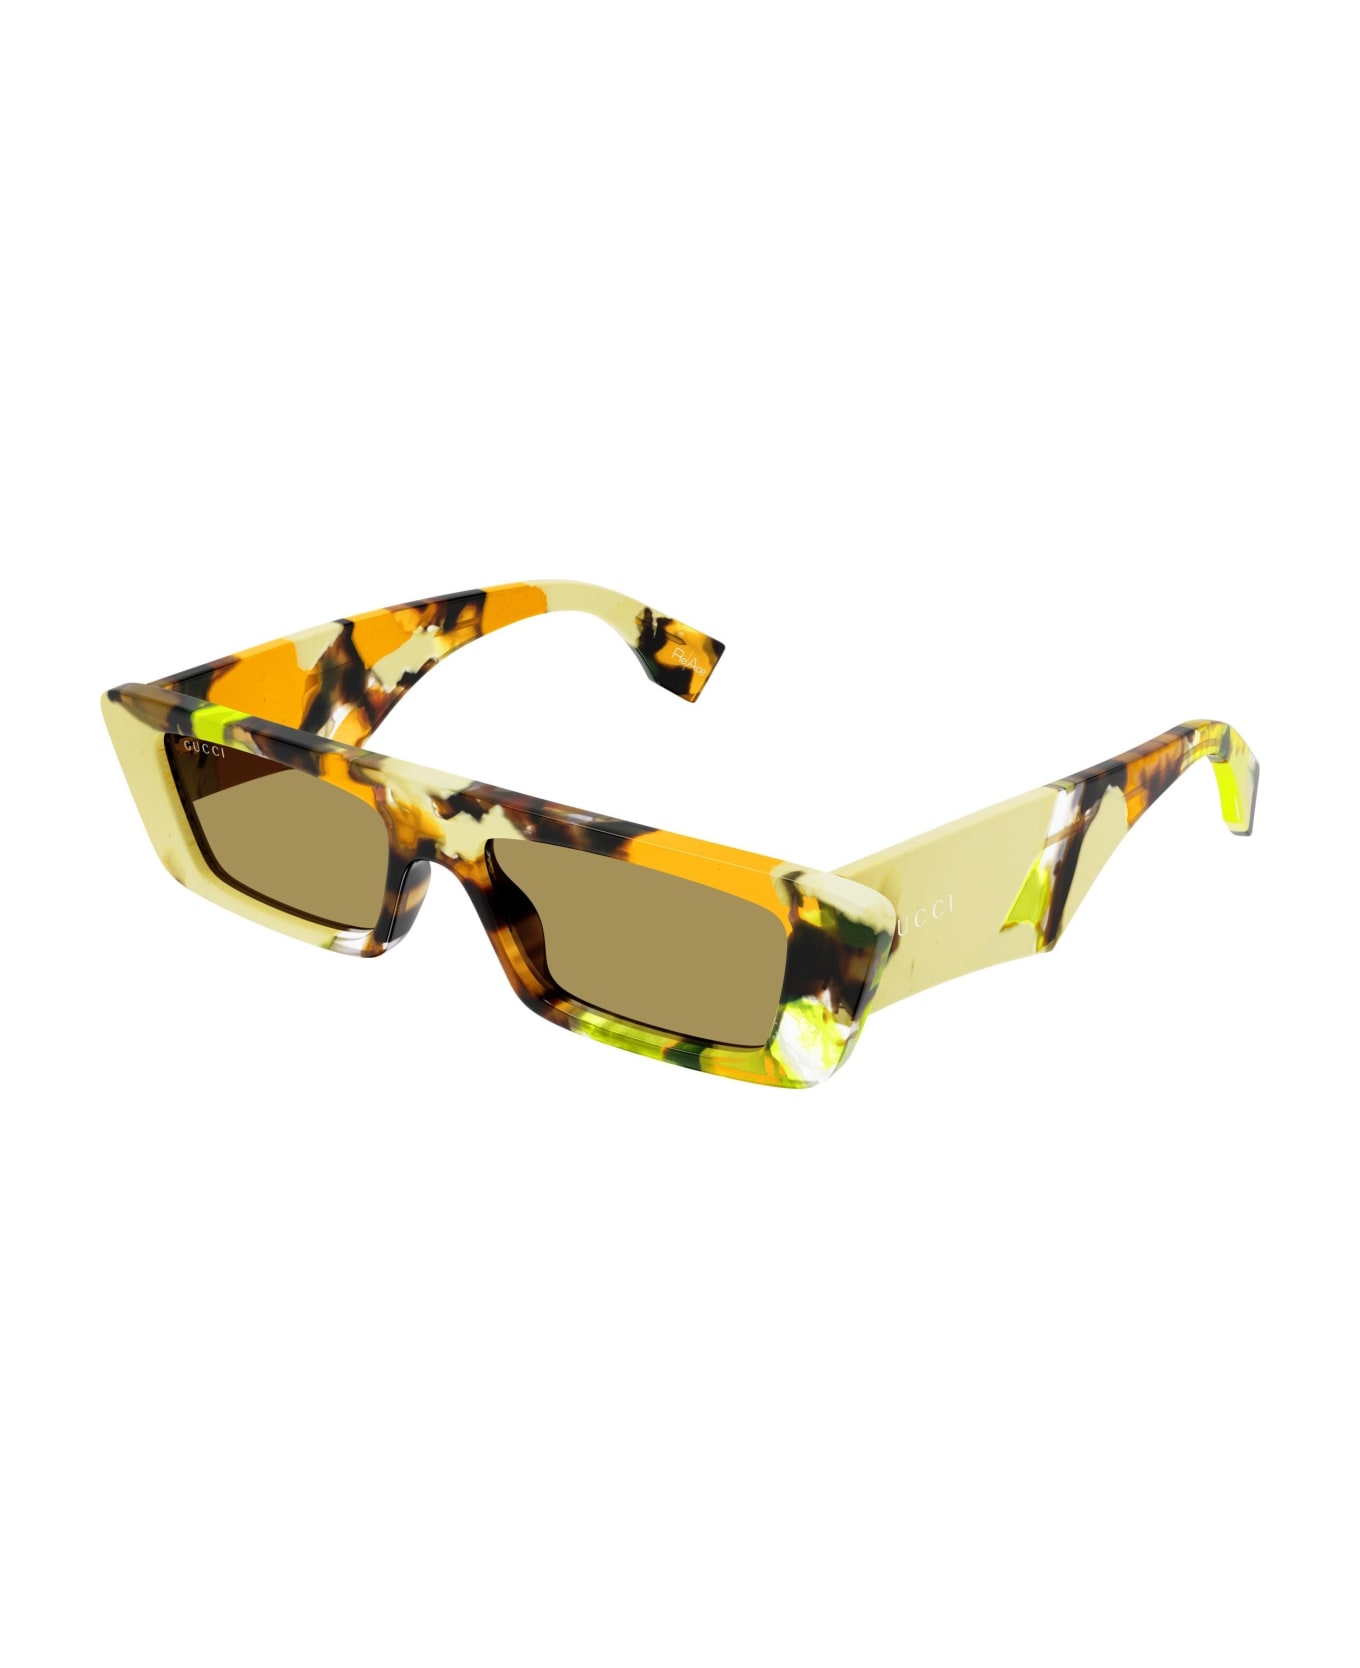 Gucci Eyewear Sunglasses - Giallo/Marrone